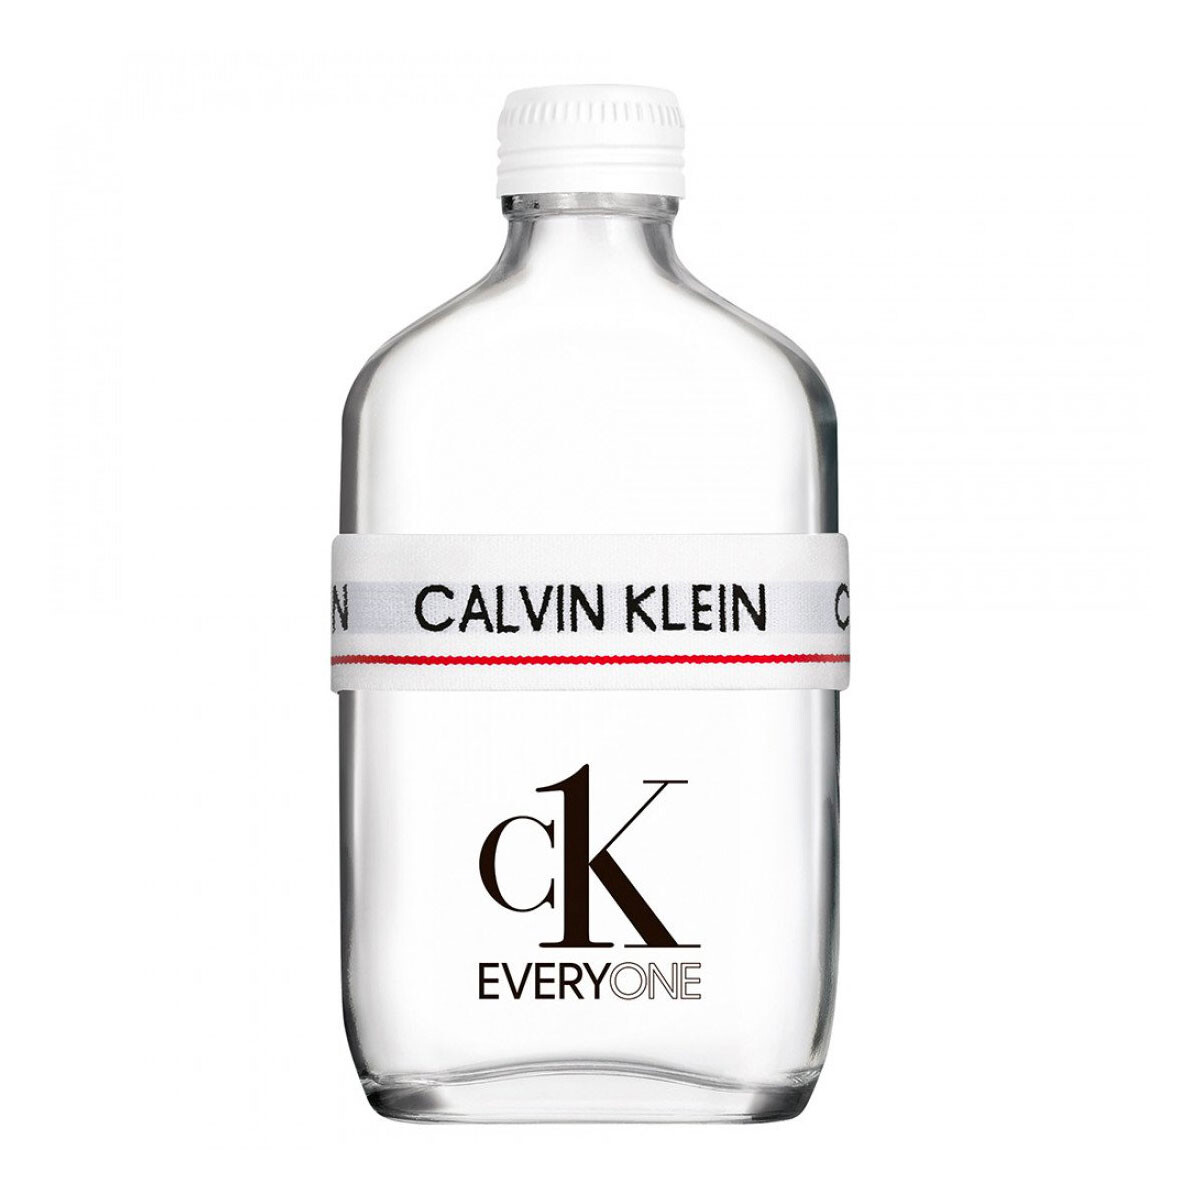 Perfume Calvin Klein CK Everyone - 200ml 